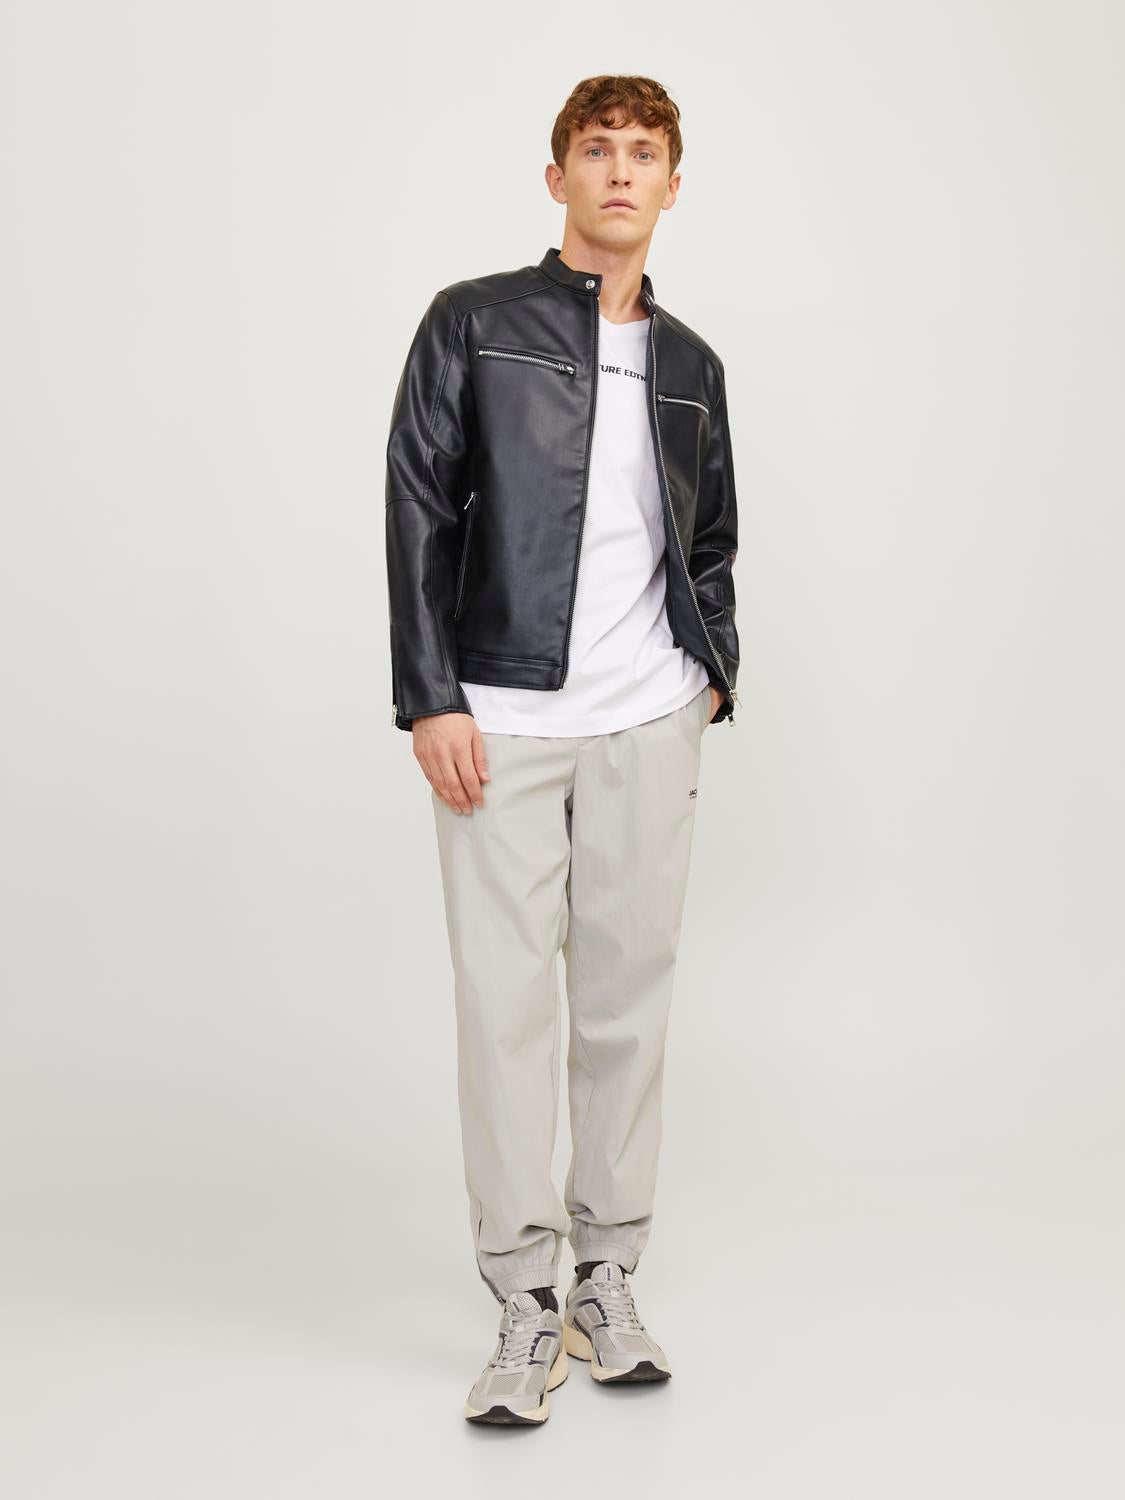 Zara - Leather Jacket With Fur Collar | Best leather jackets, Leather jacket  style, Leather jacket black